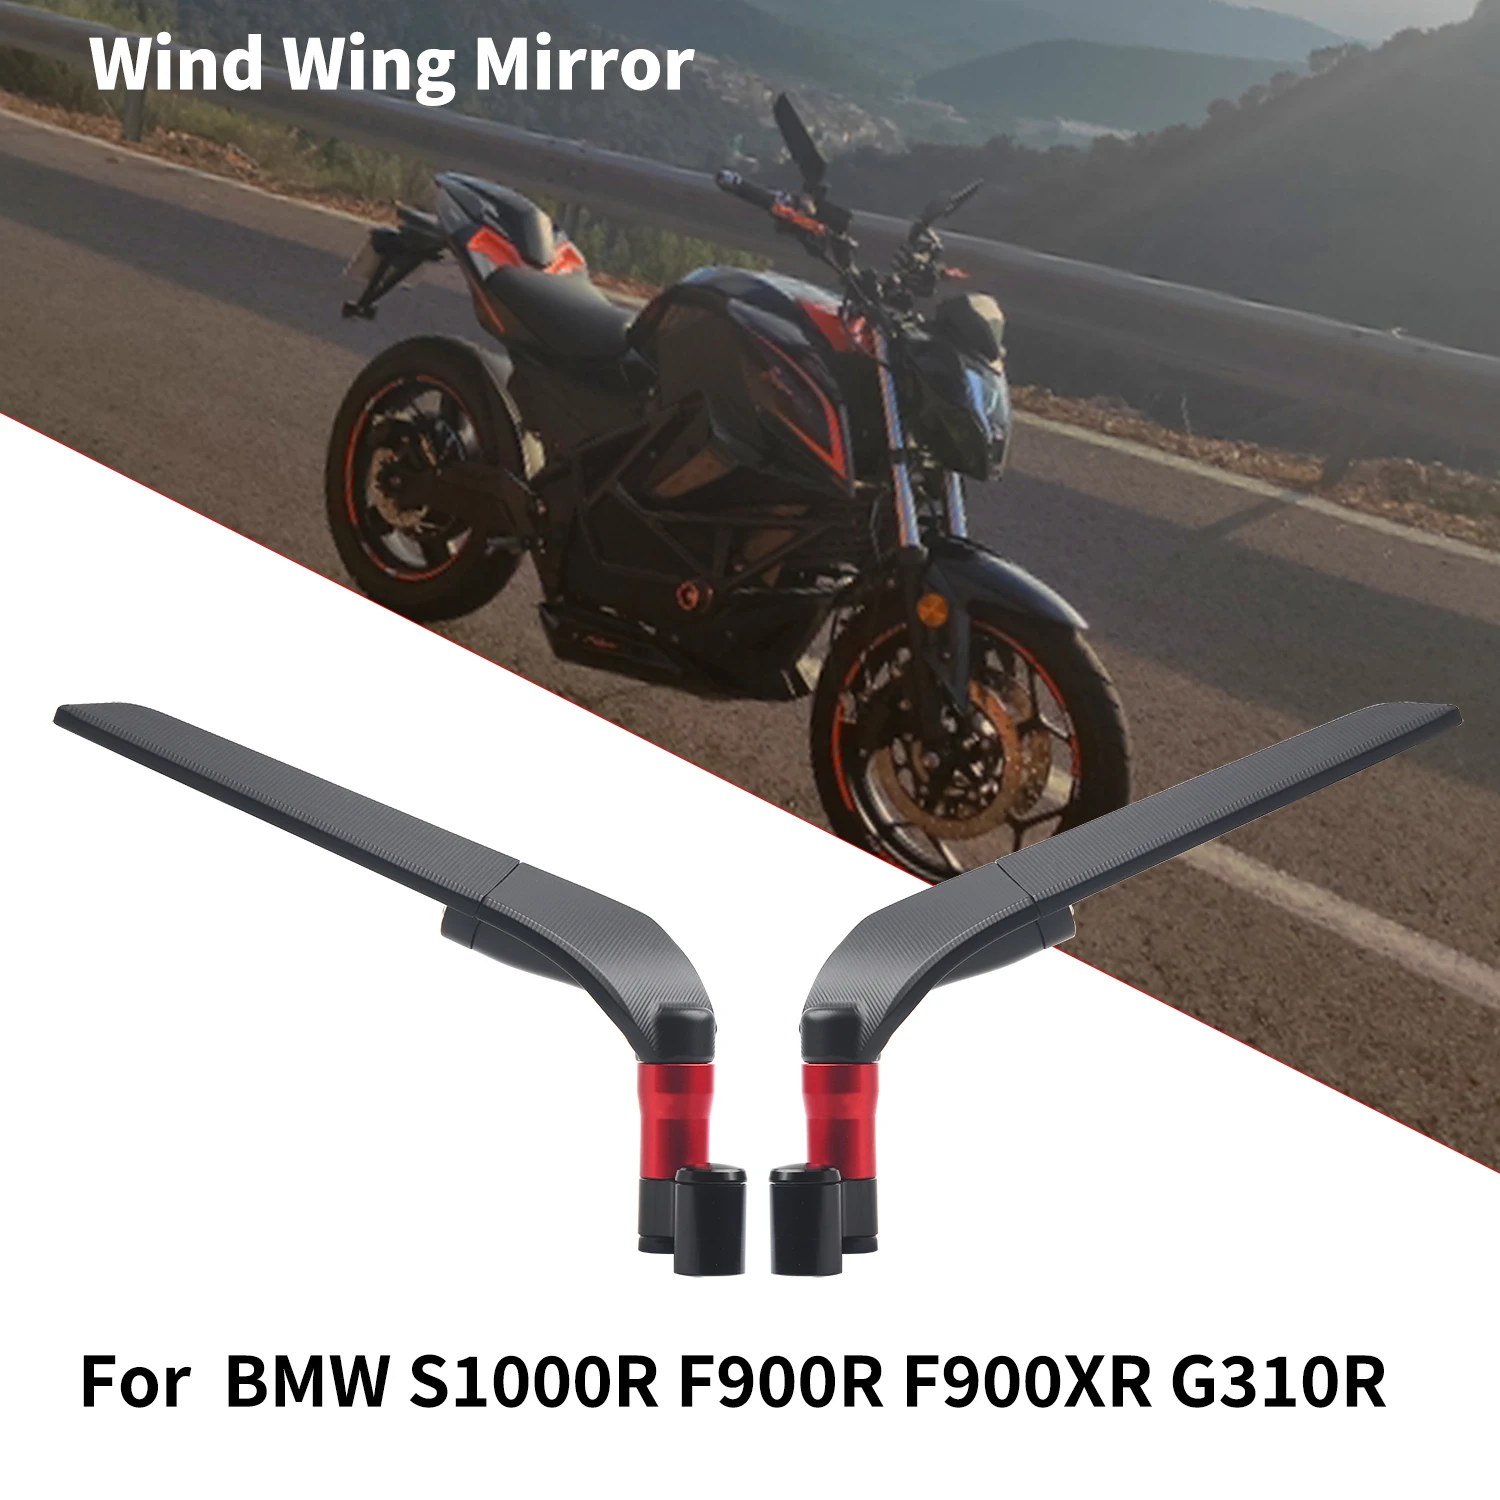 

For BMW S1000R F900R F900XR G310R G310GS C400X C400GT Universal Motorcycle Mirror Wind Wing side Rearview Reversing mirror